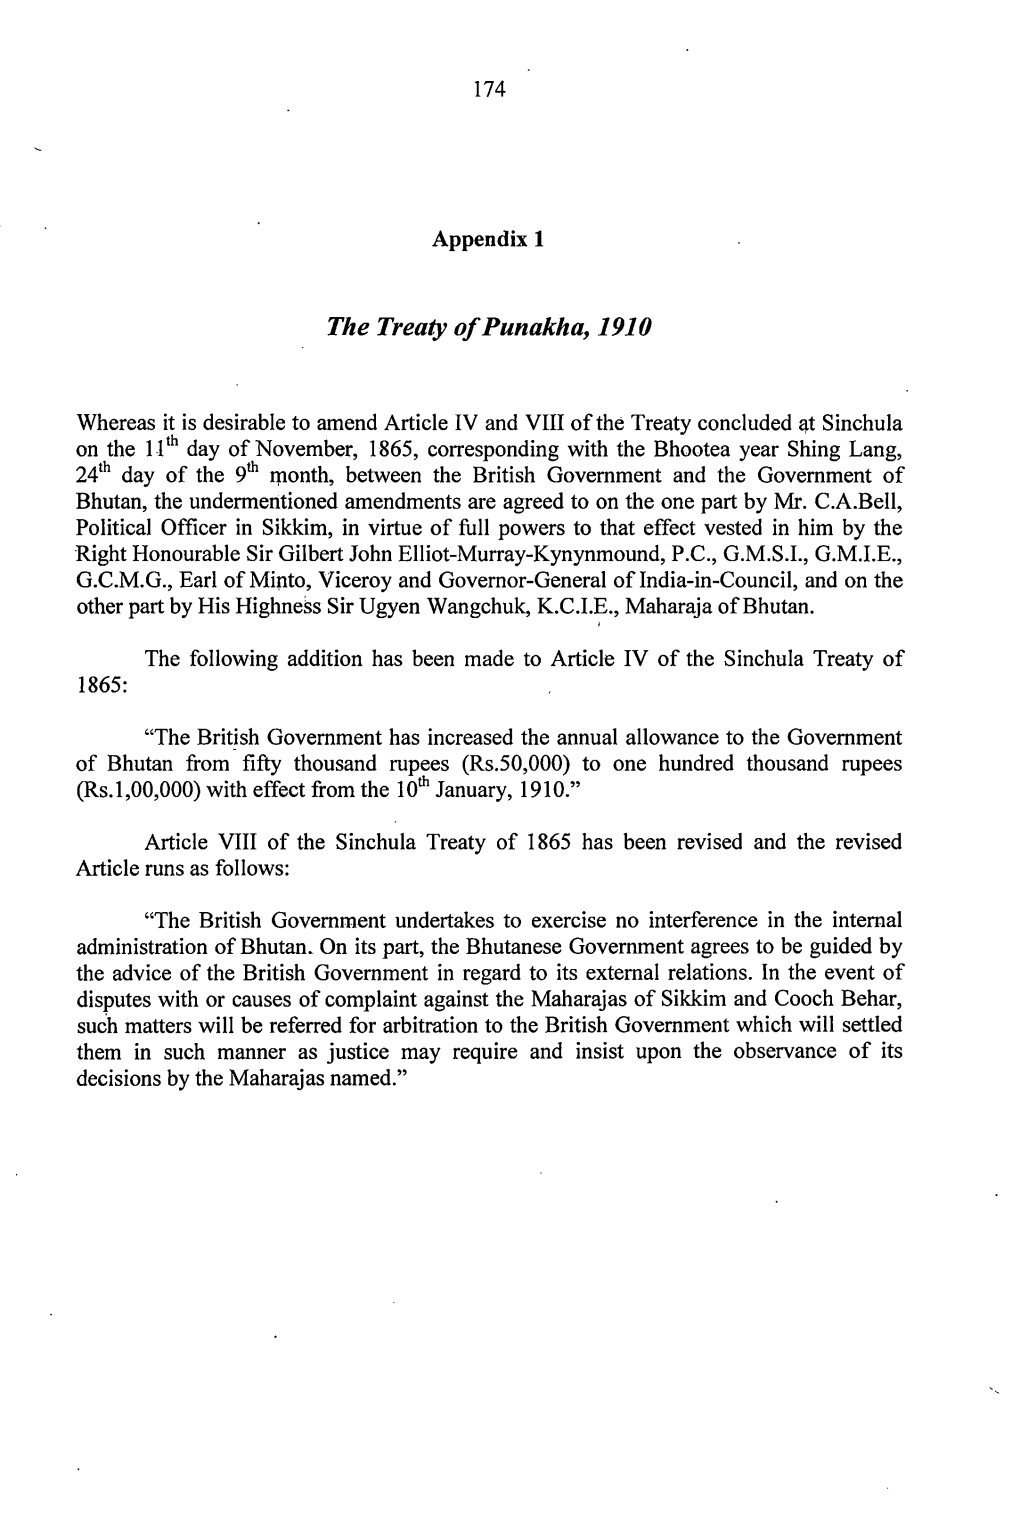 The Treaty of Punakha, 1910